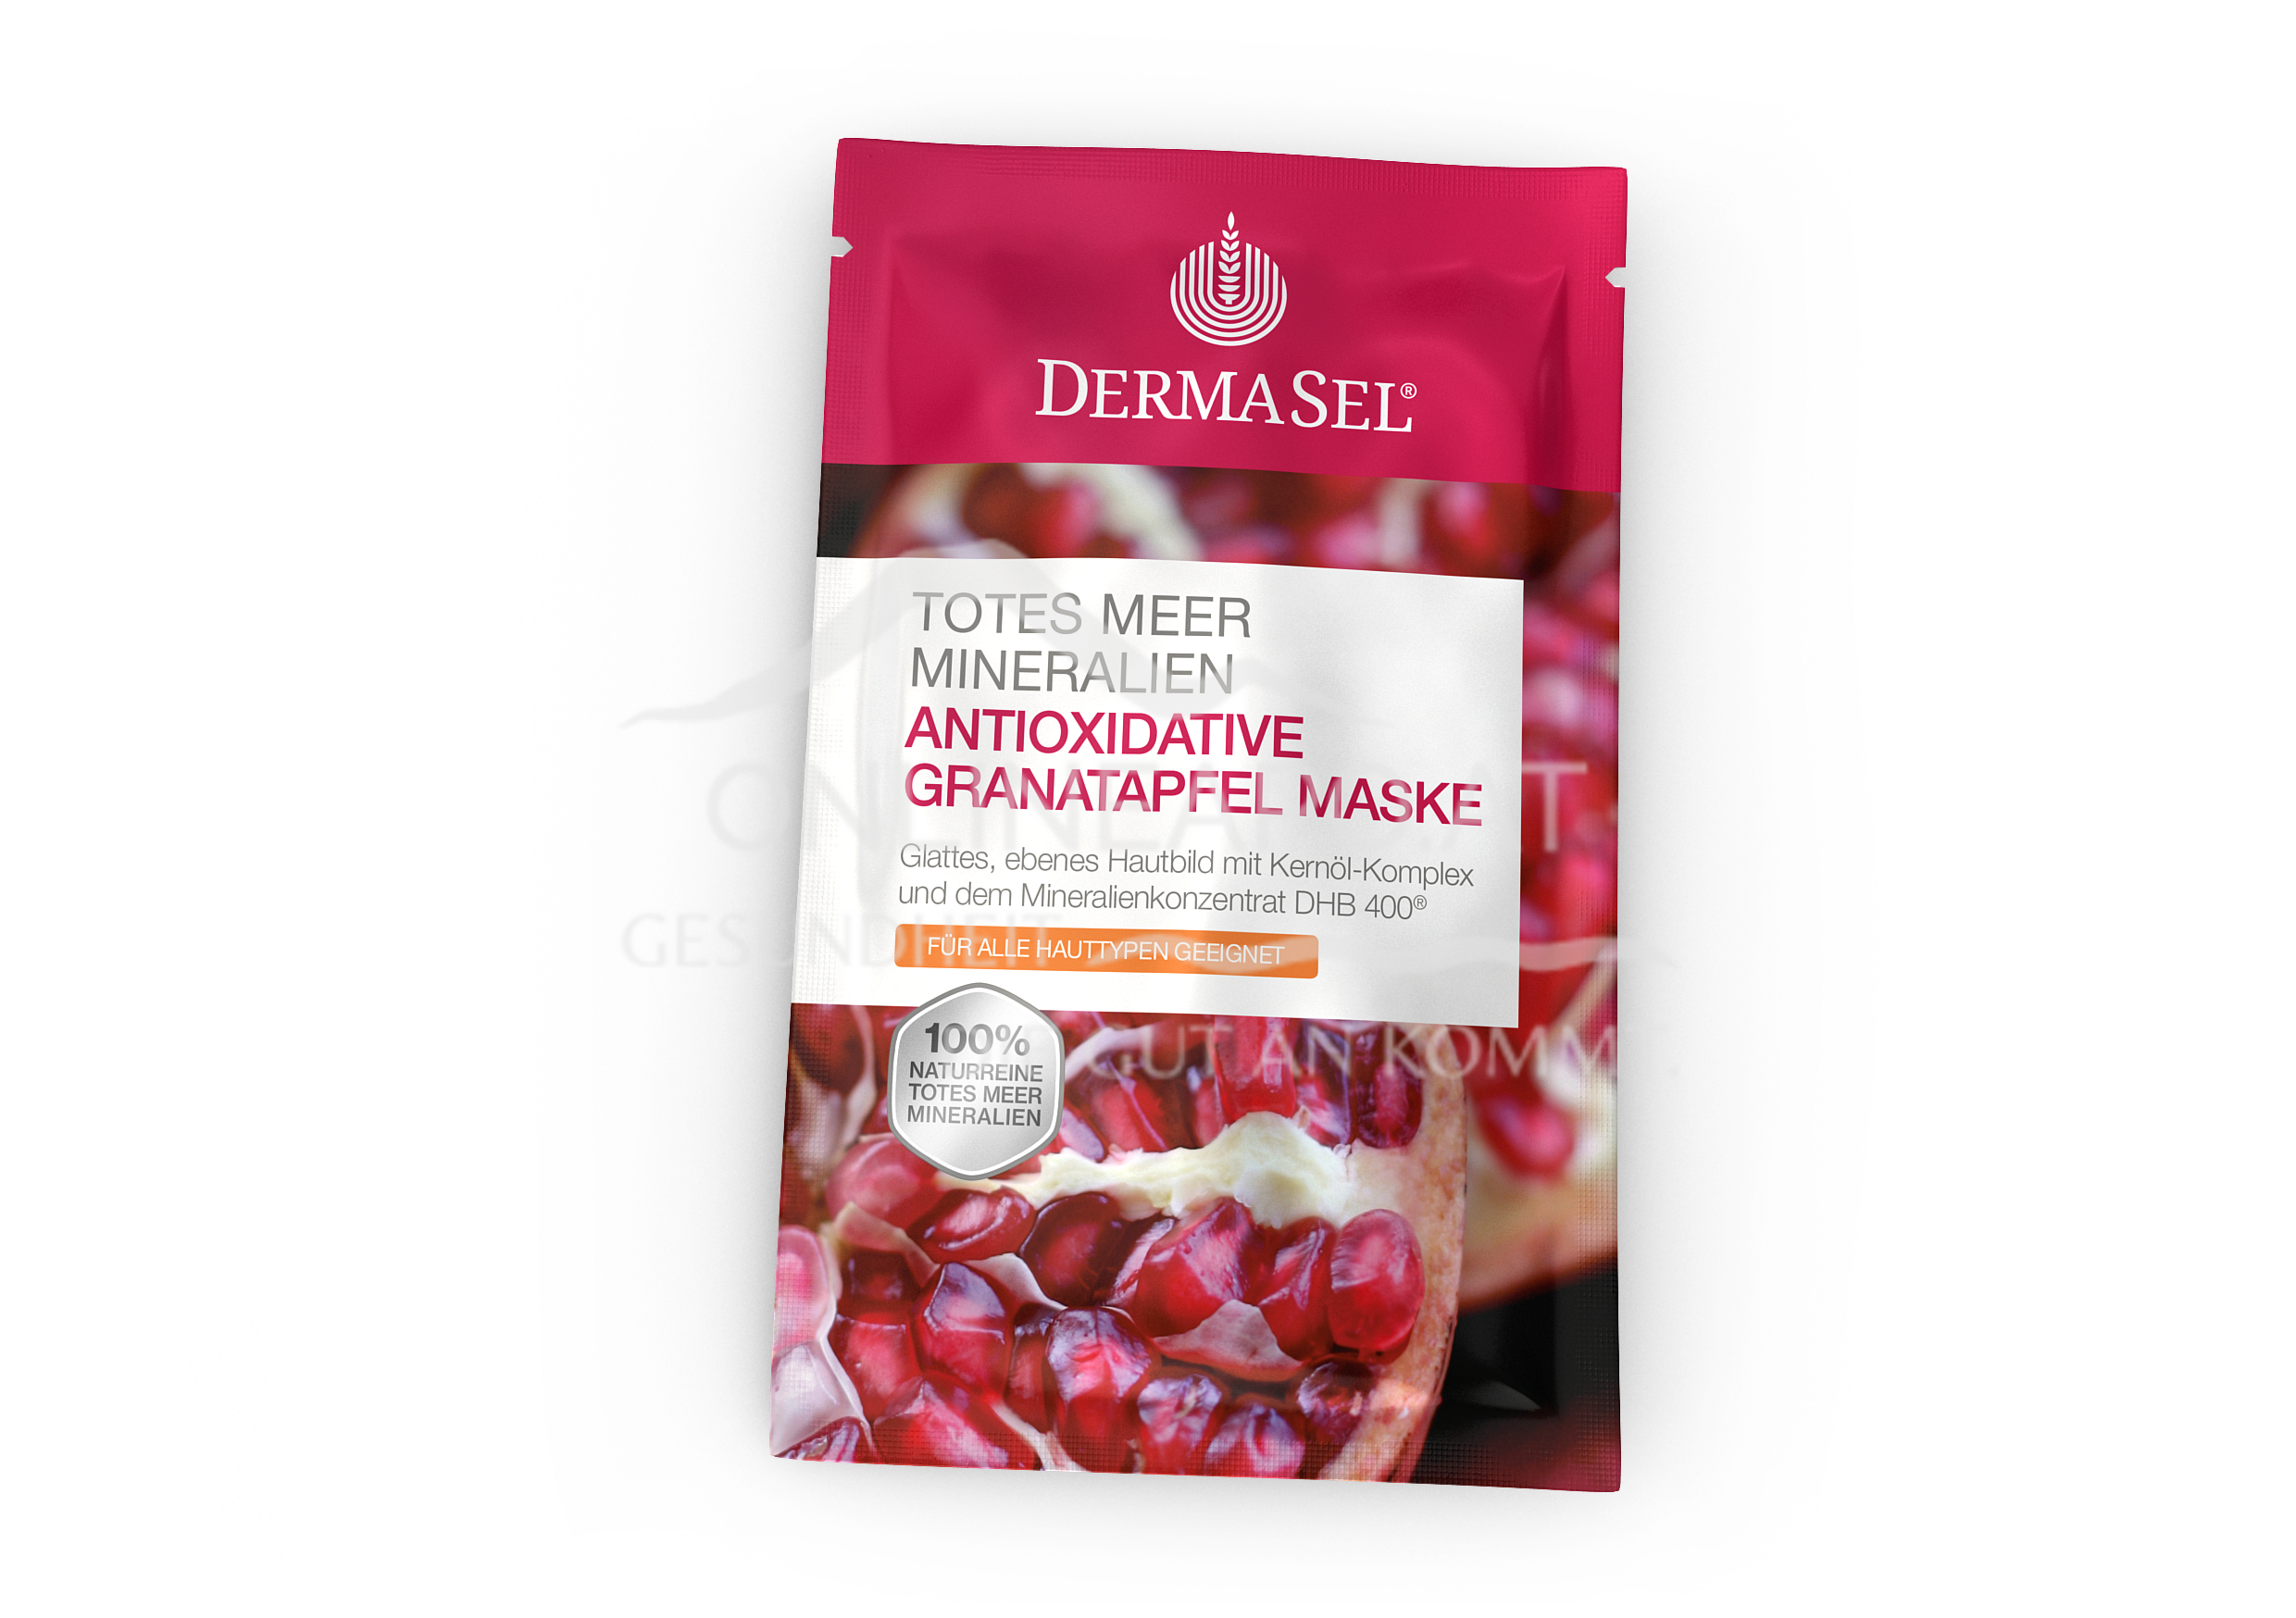 DermaSel® Totes Meer Mineralien Antioxidative Granatapfel Maske